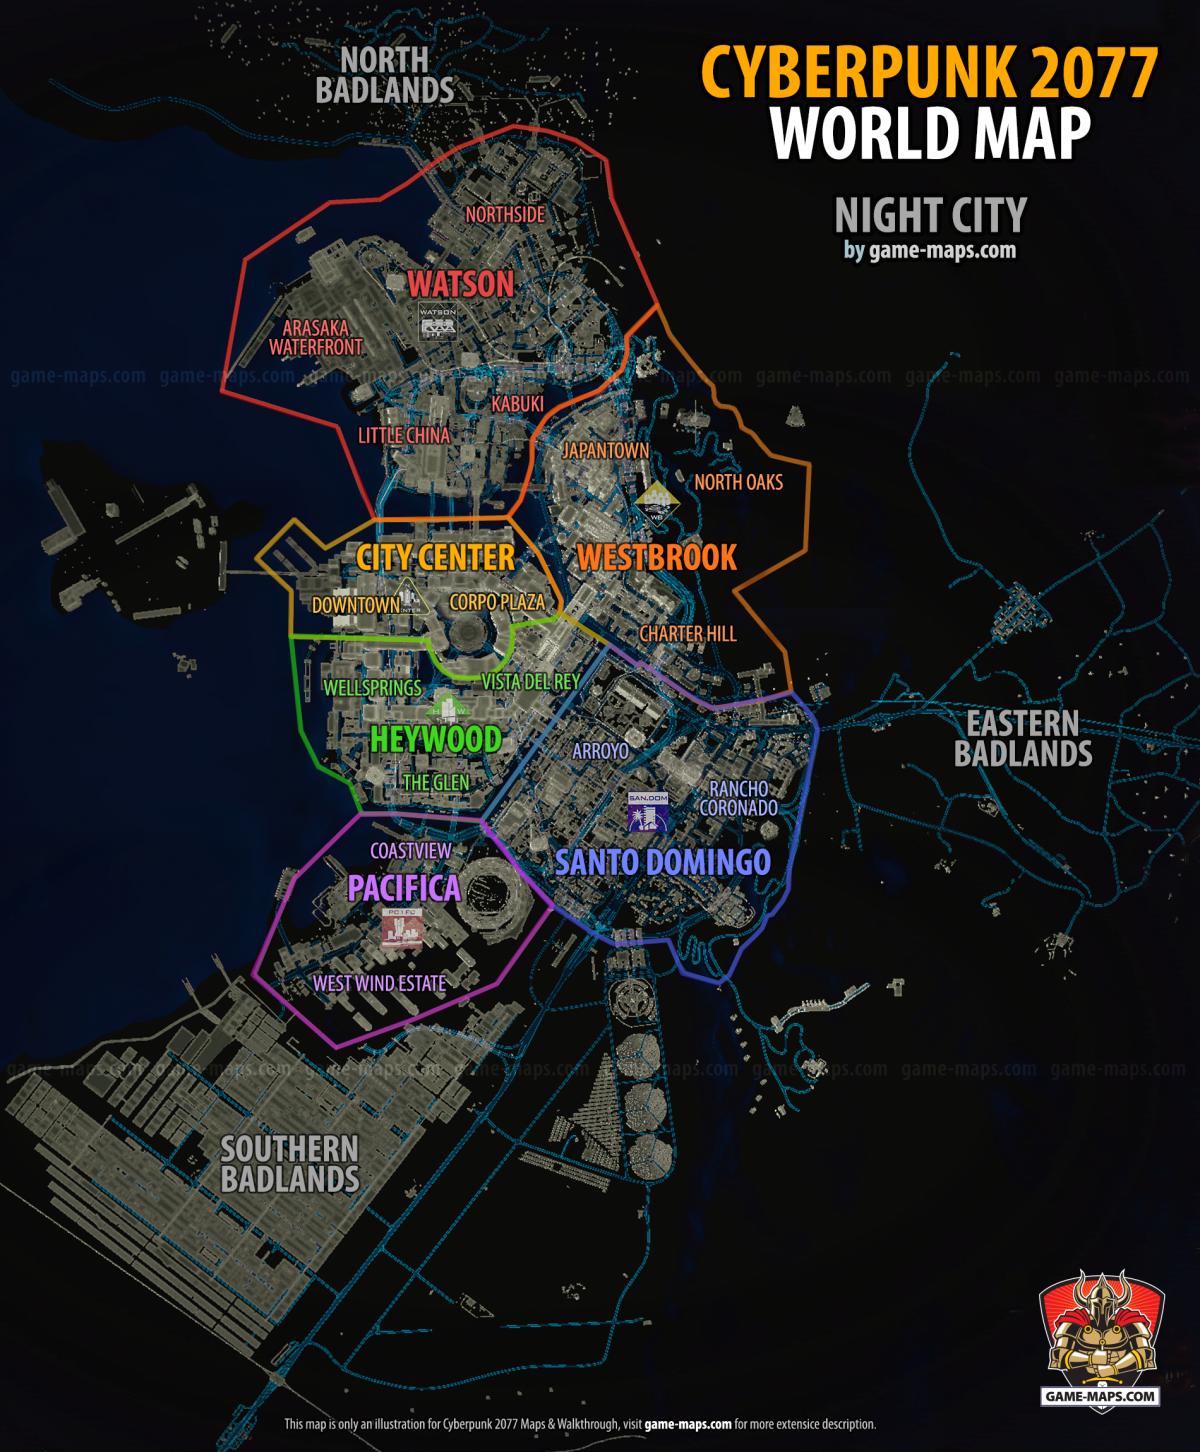 Preview Night City Map Cyberpunk 2077 - Cyberpunk 2077